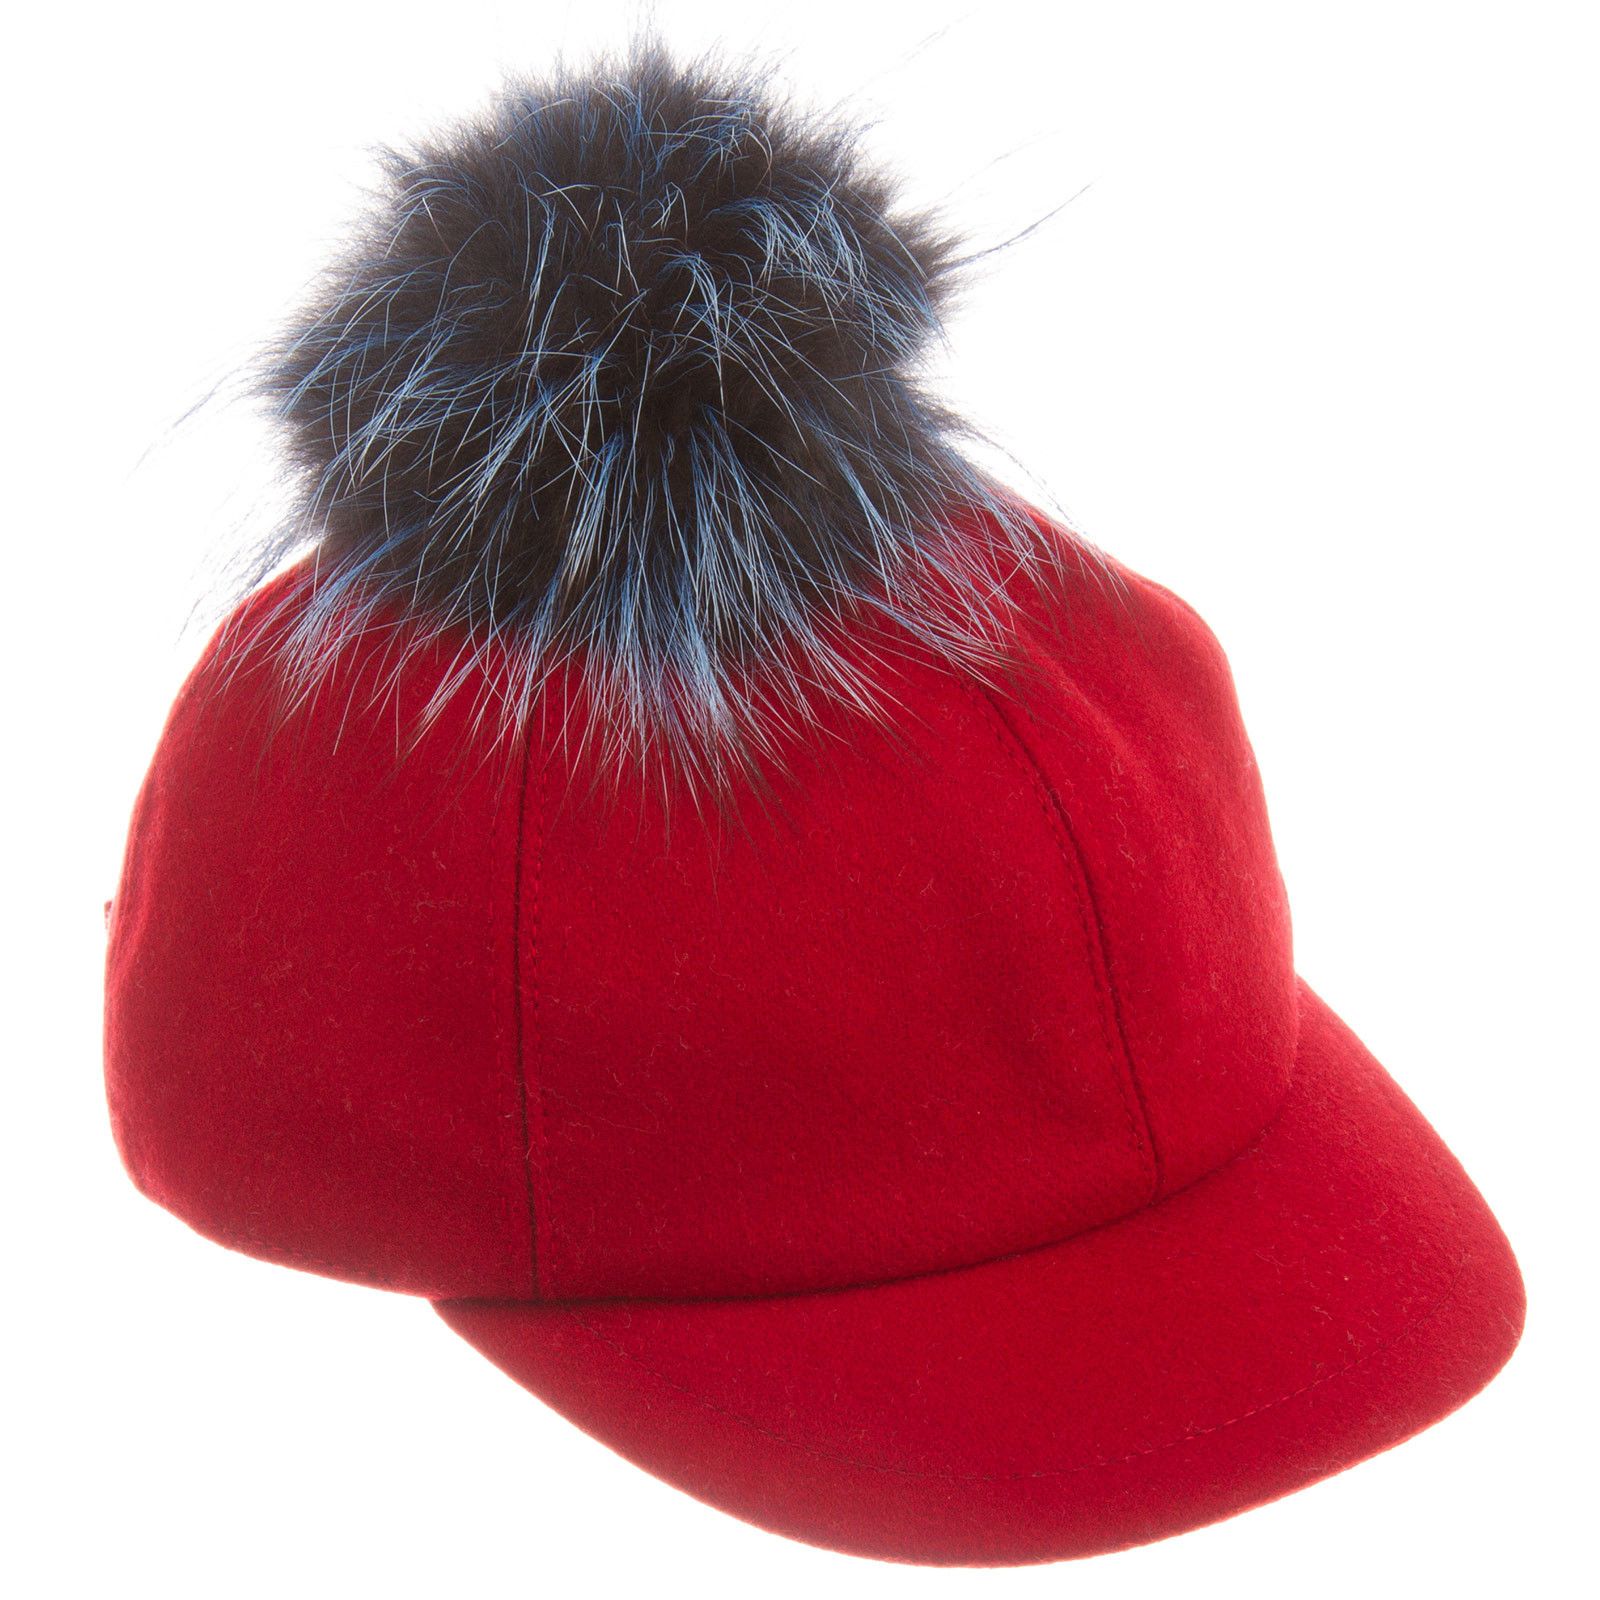 Girls Red Wool Cap With Blue Fur Trim - CÉMAROSE | Children's Fashion Store - 1